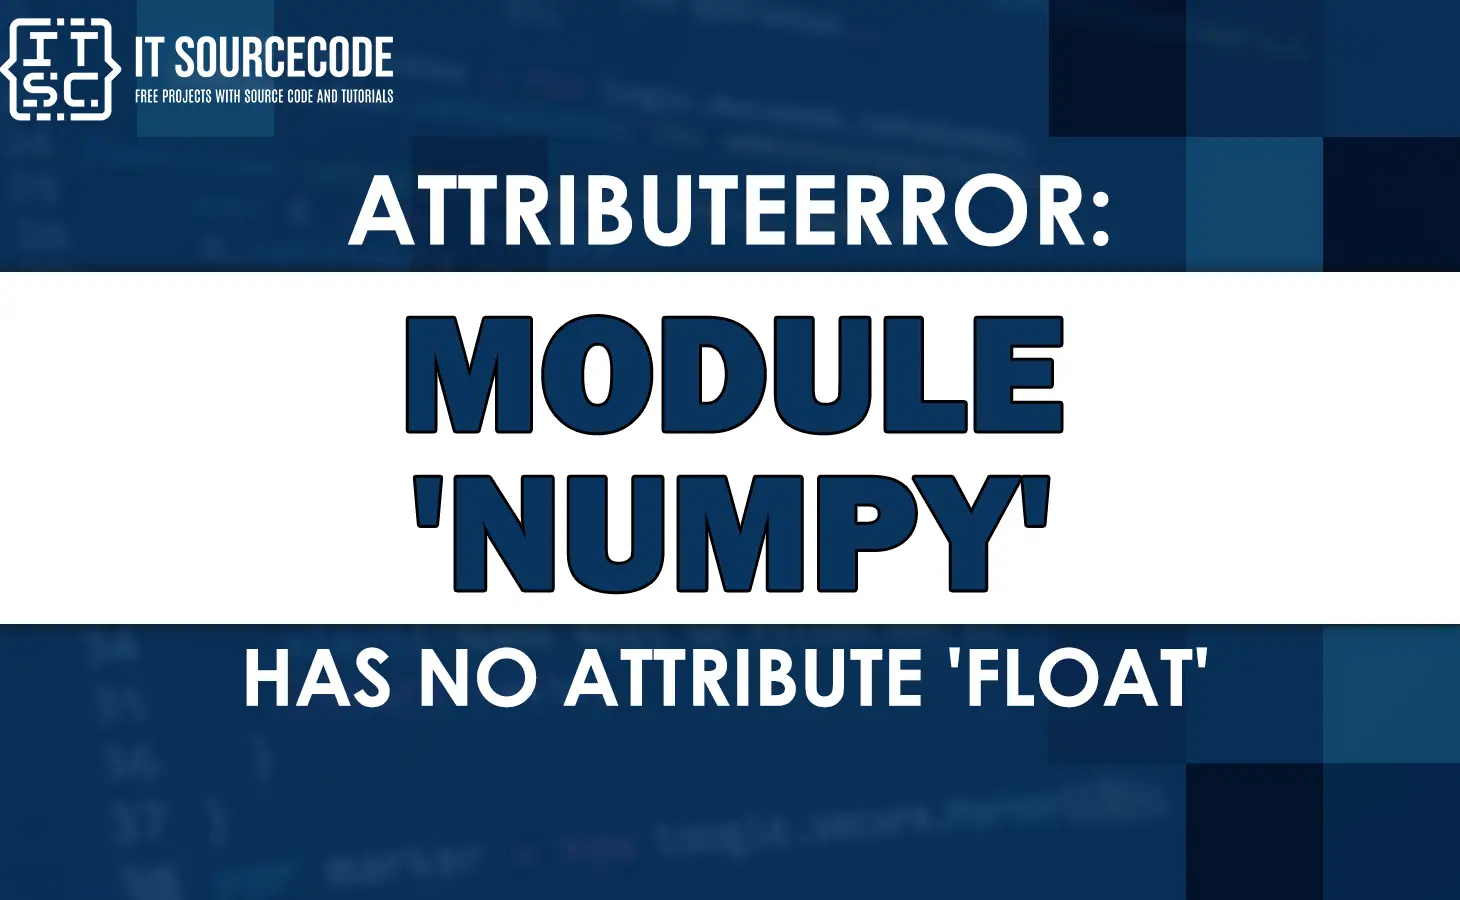 Attributeerror: module 'numpy' has no attribute 'float'